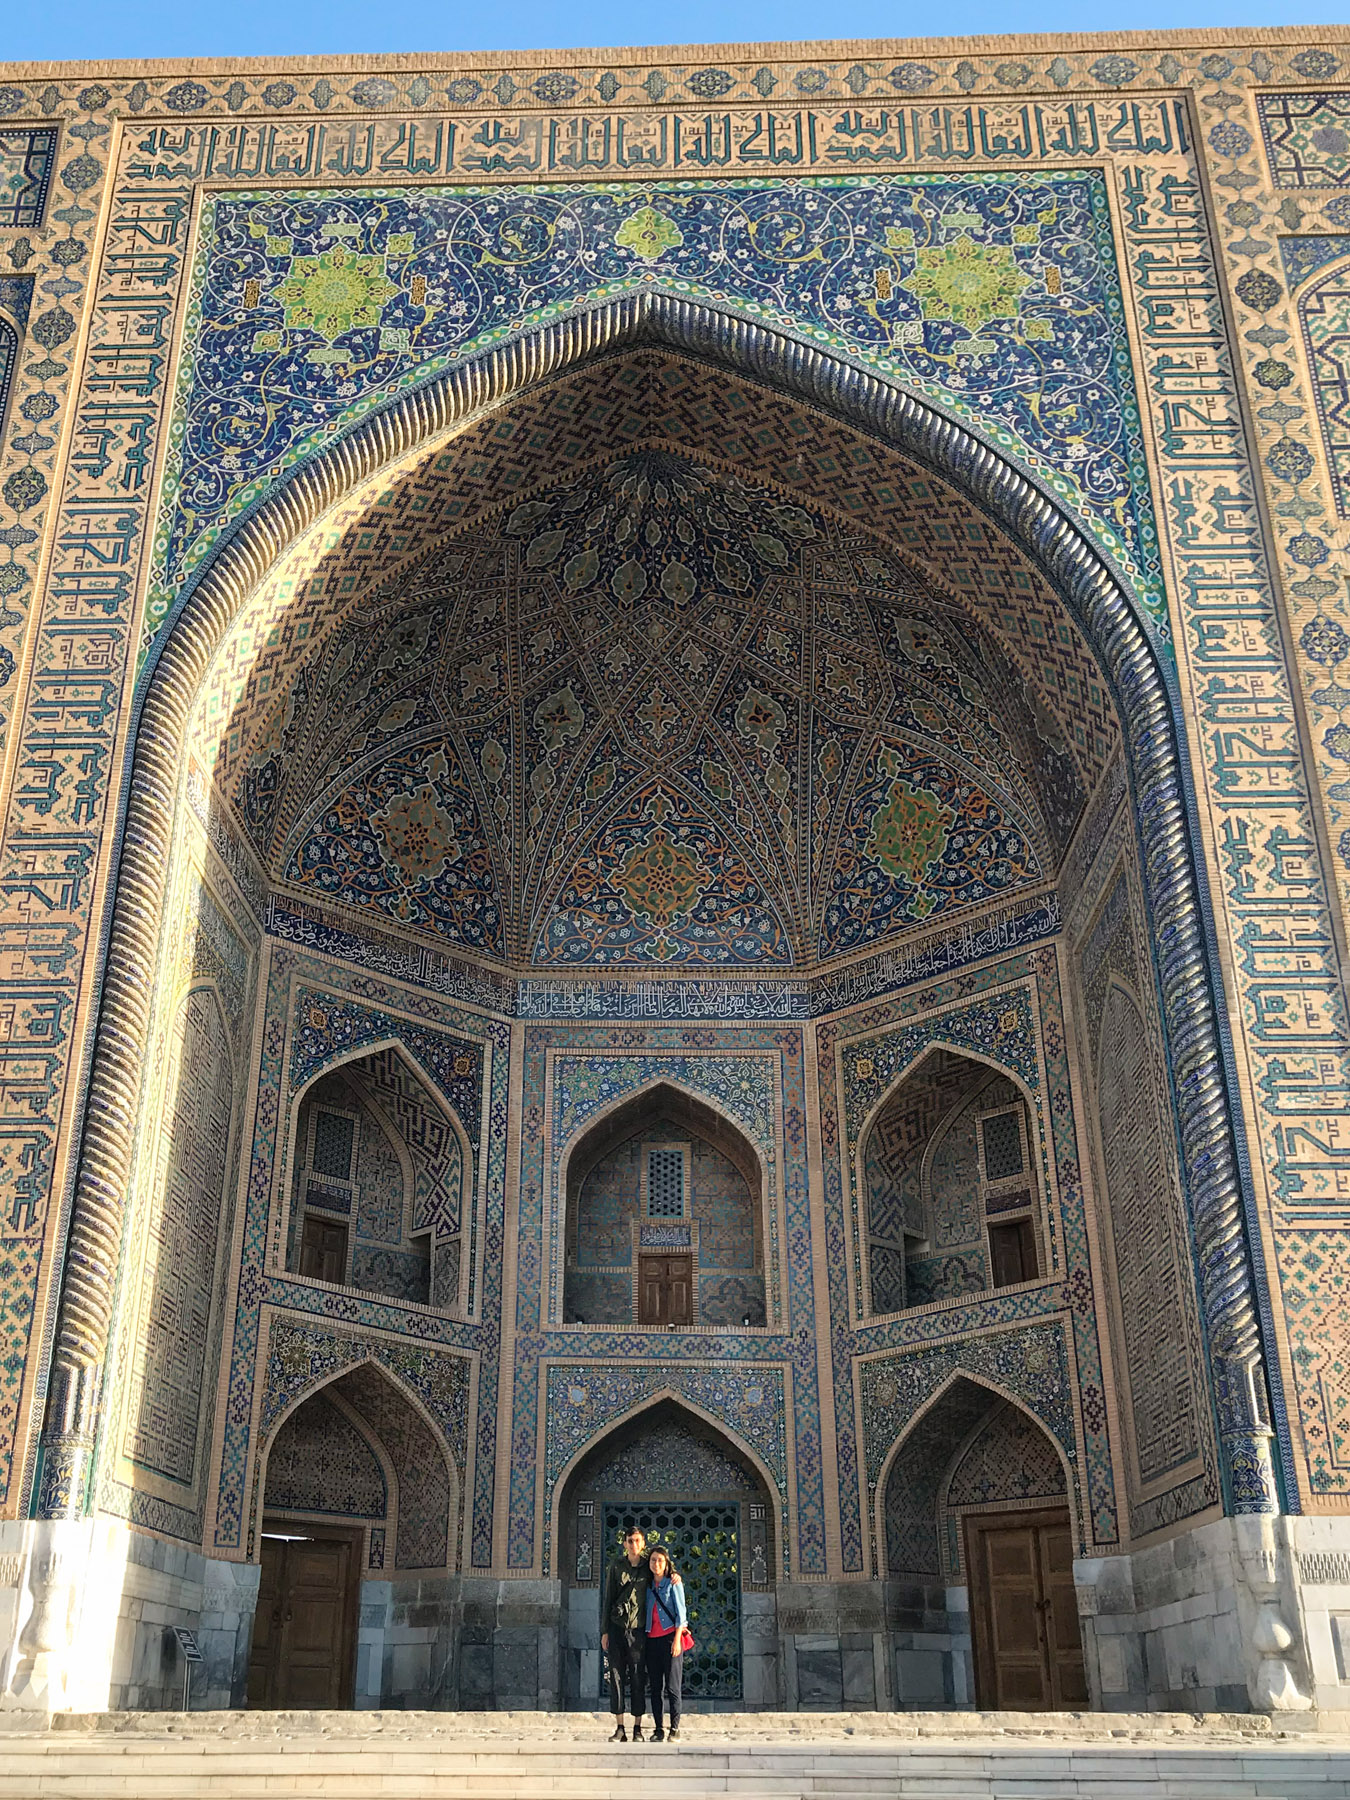 The Registan in Samarkand